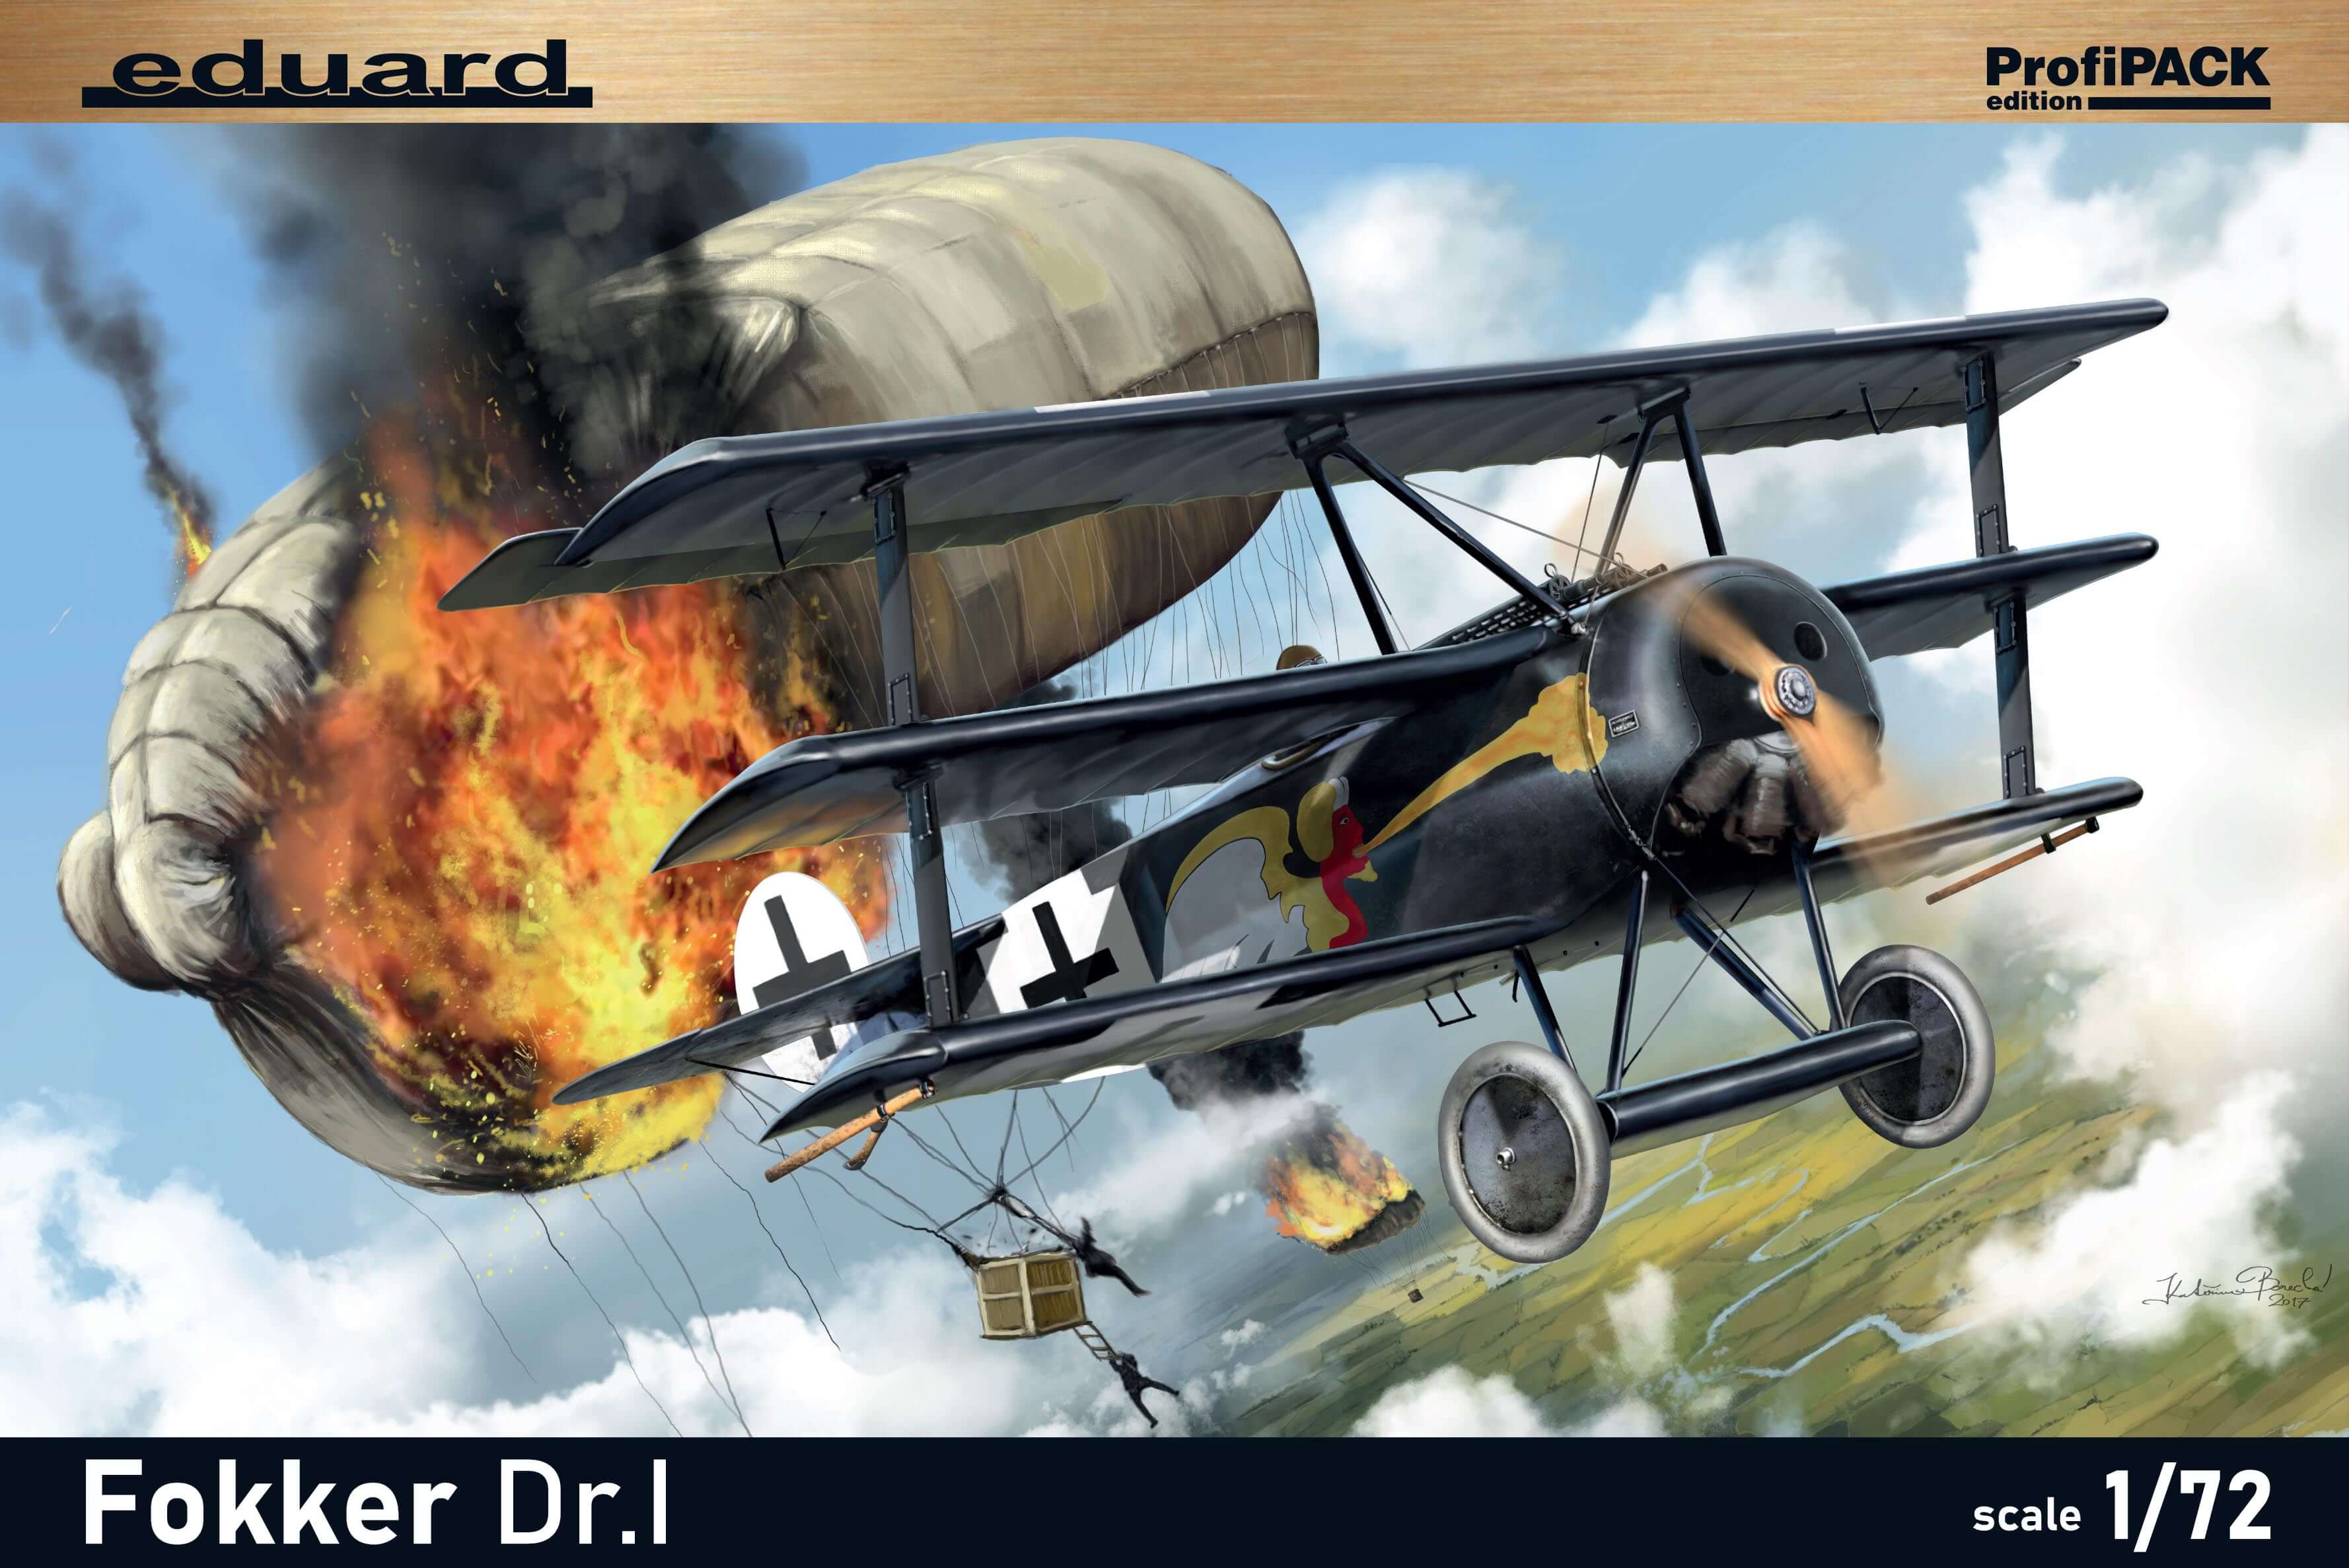 Сборная модель 1/72  Fokker Dr.I Triplane  ProfiPACK edition (Eduard kits)